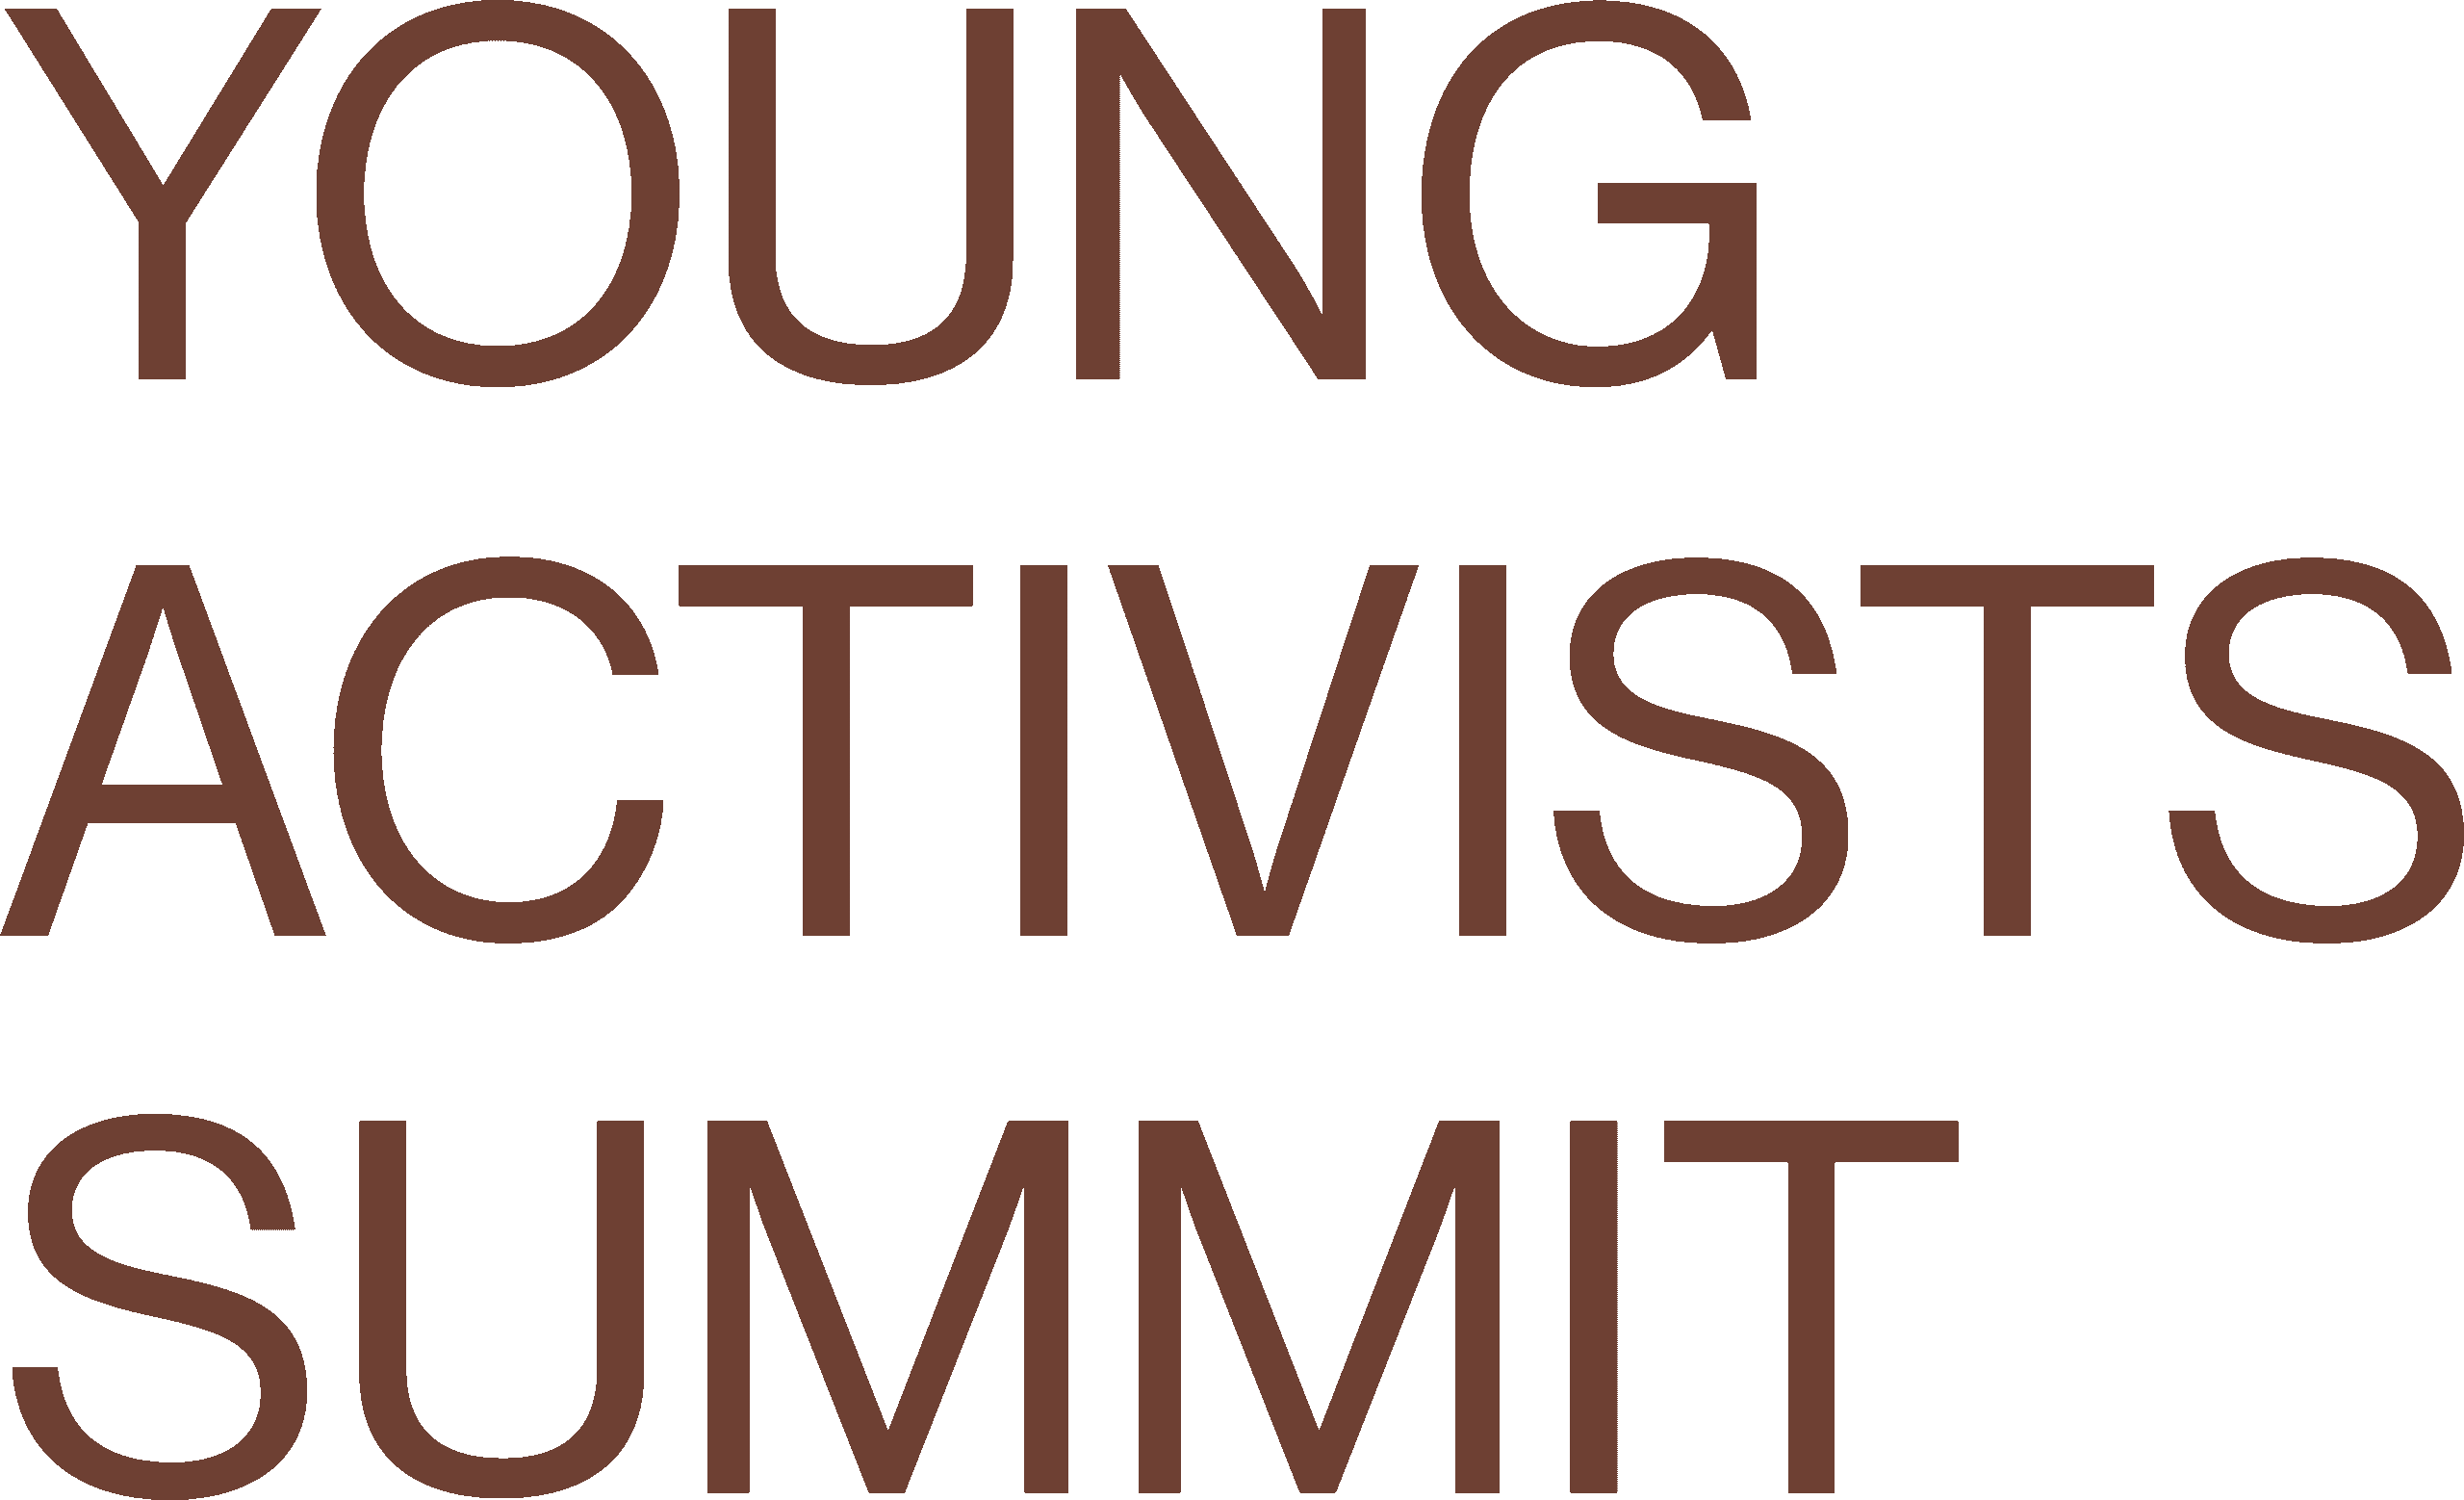 Young Activists Summit logo